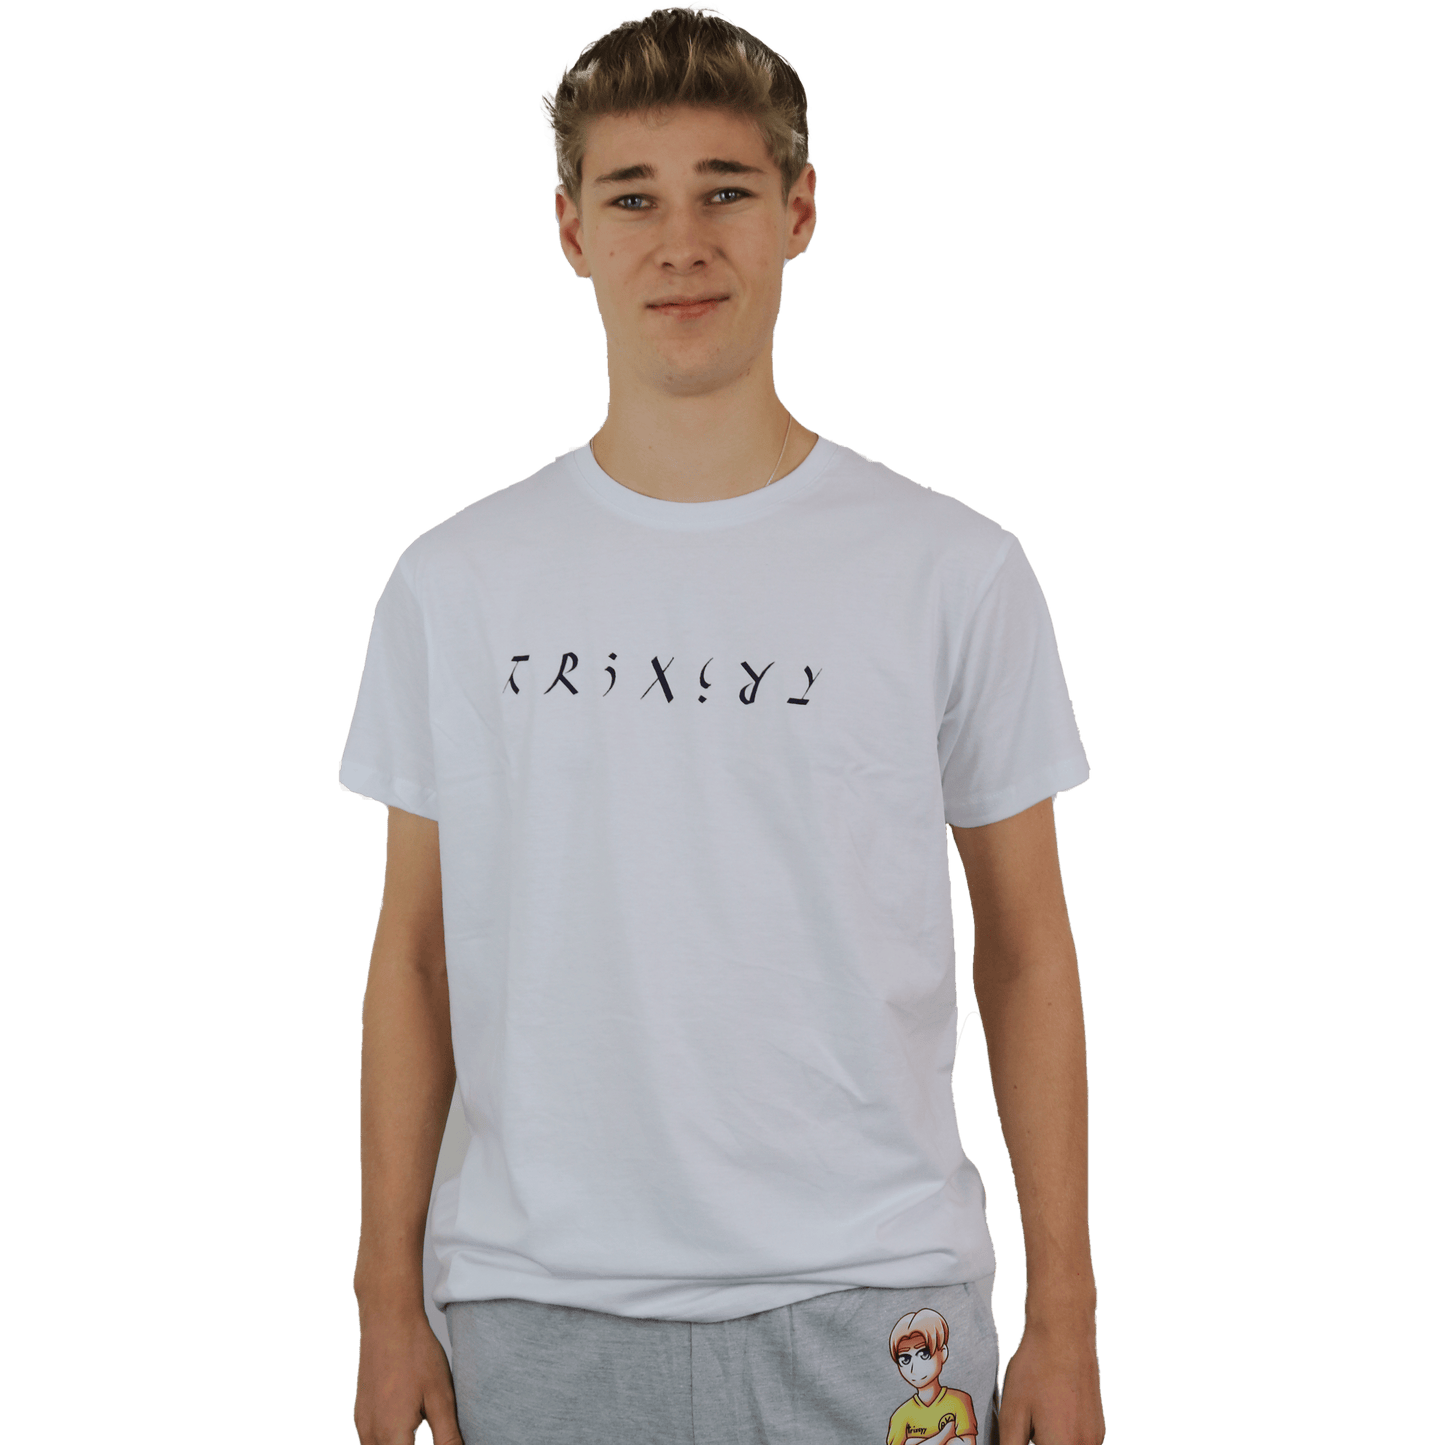 Trixcyy T-Shirt: Ambigram